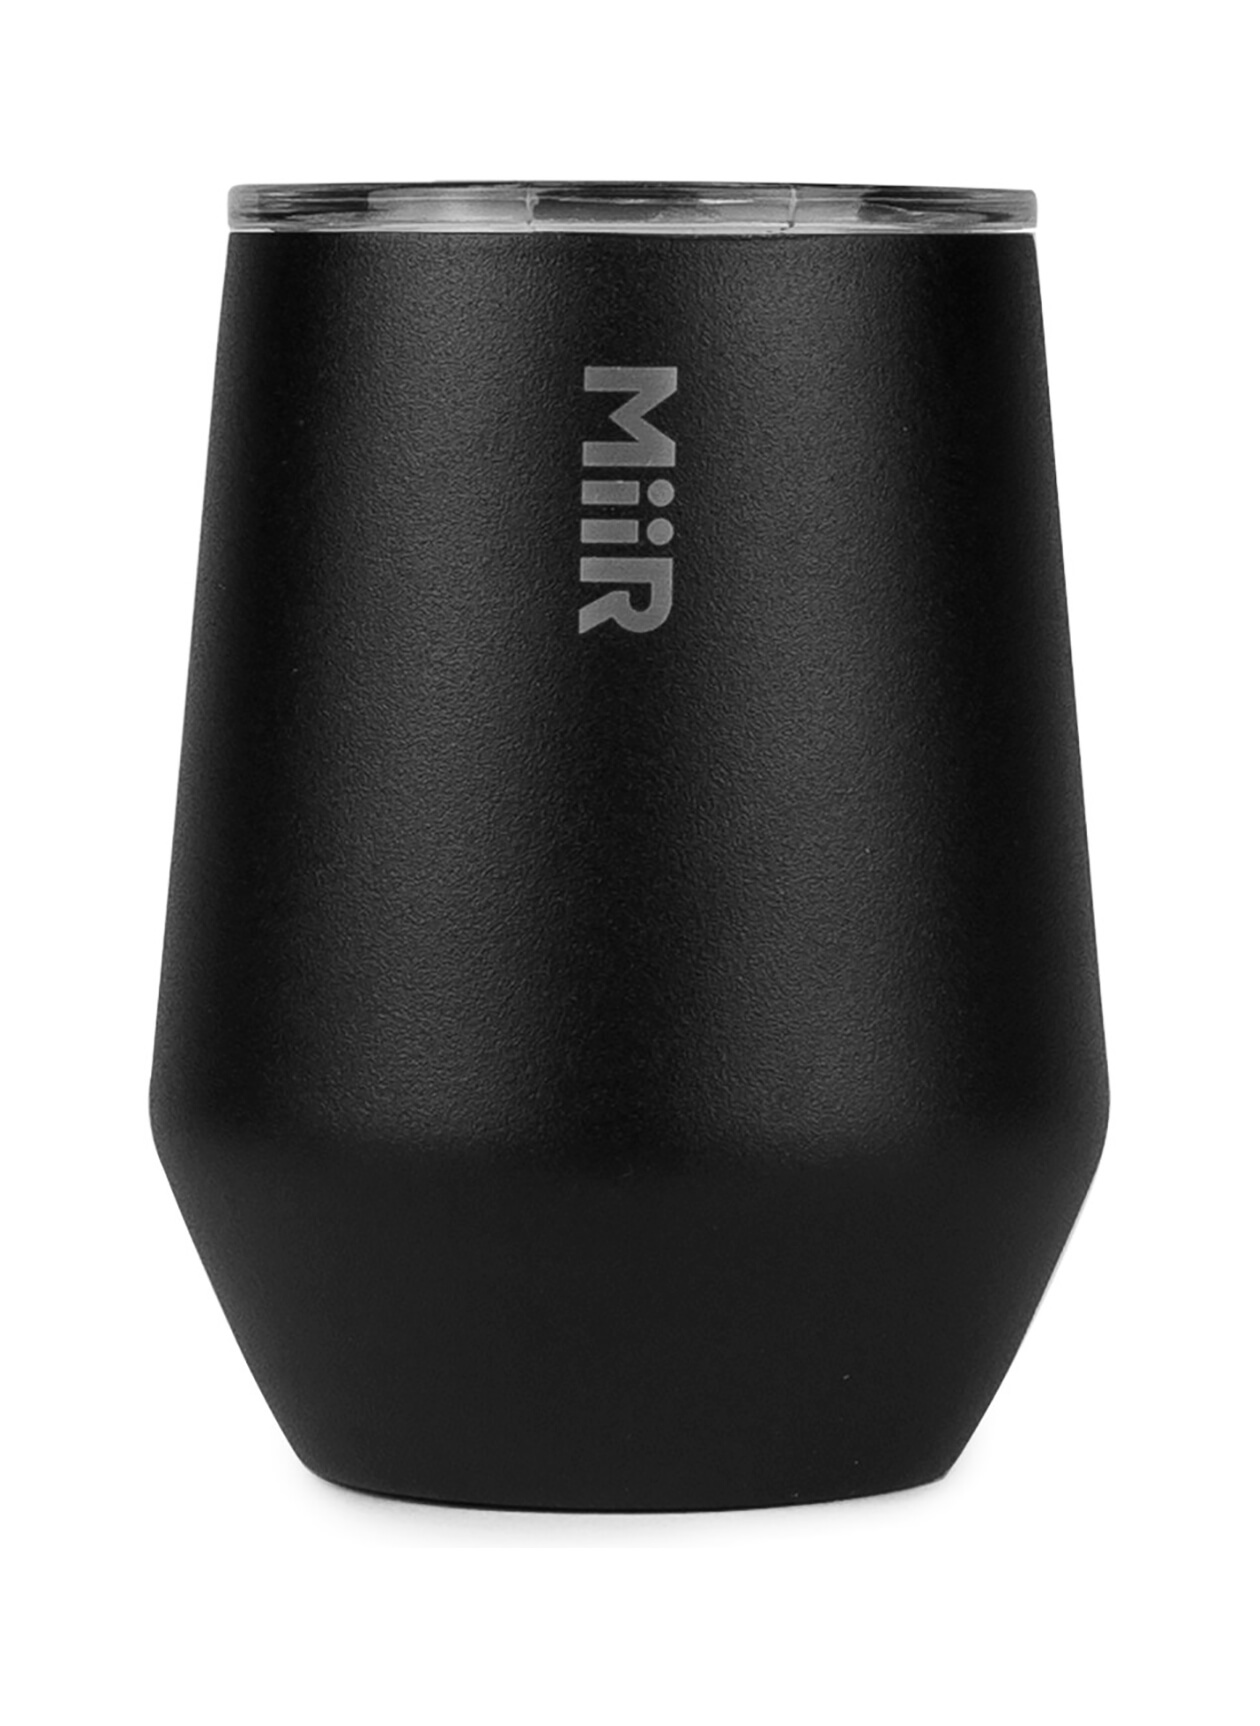 Miir Black Powder Vacuum Insulated Wine Tumbler - 10 oz